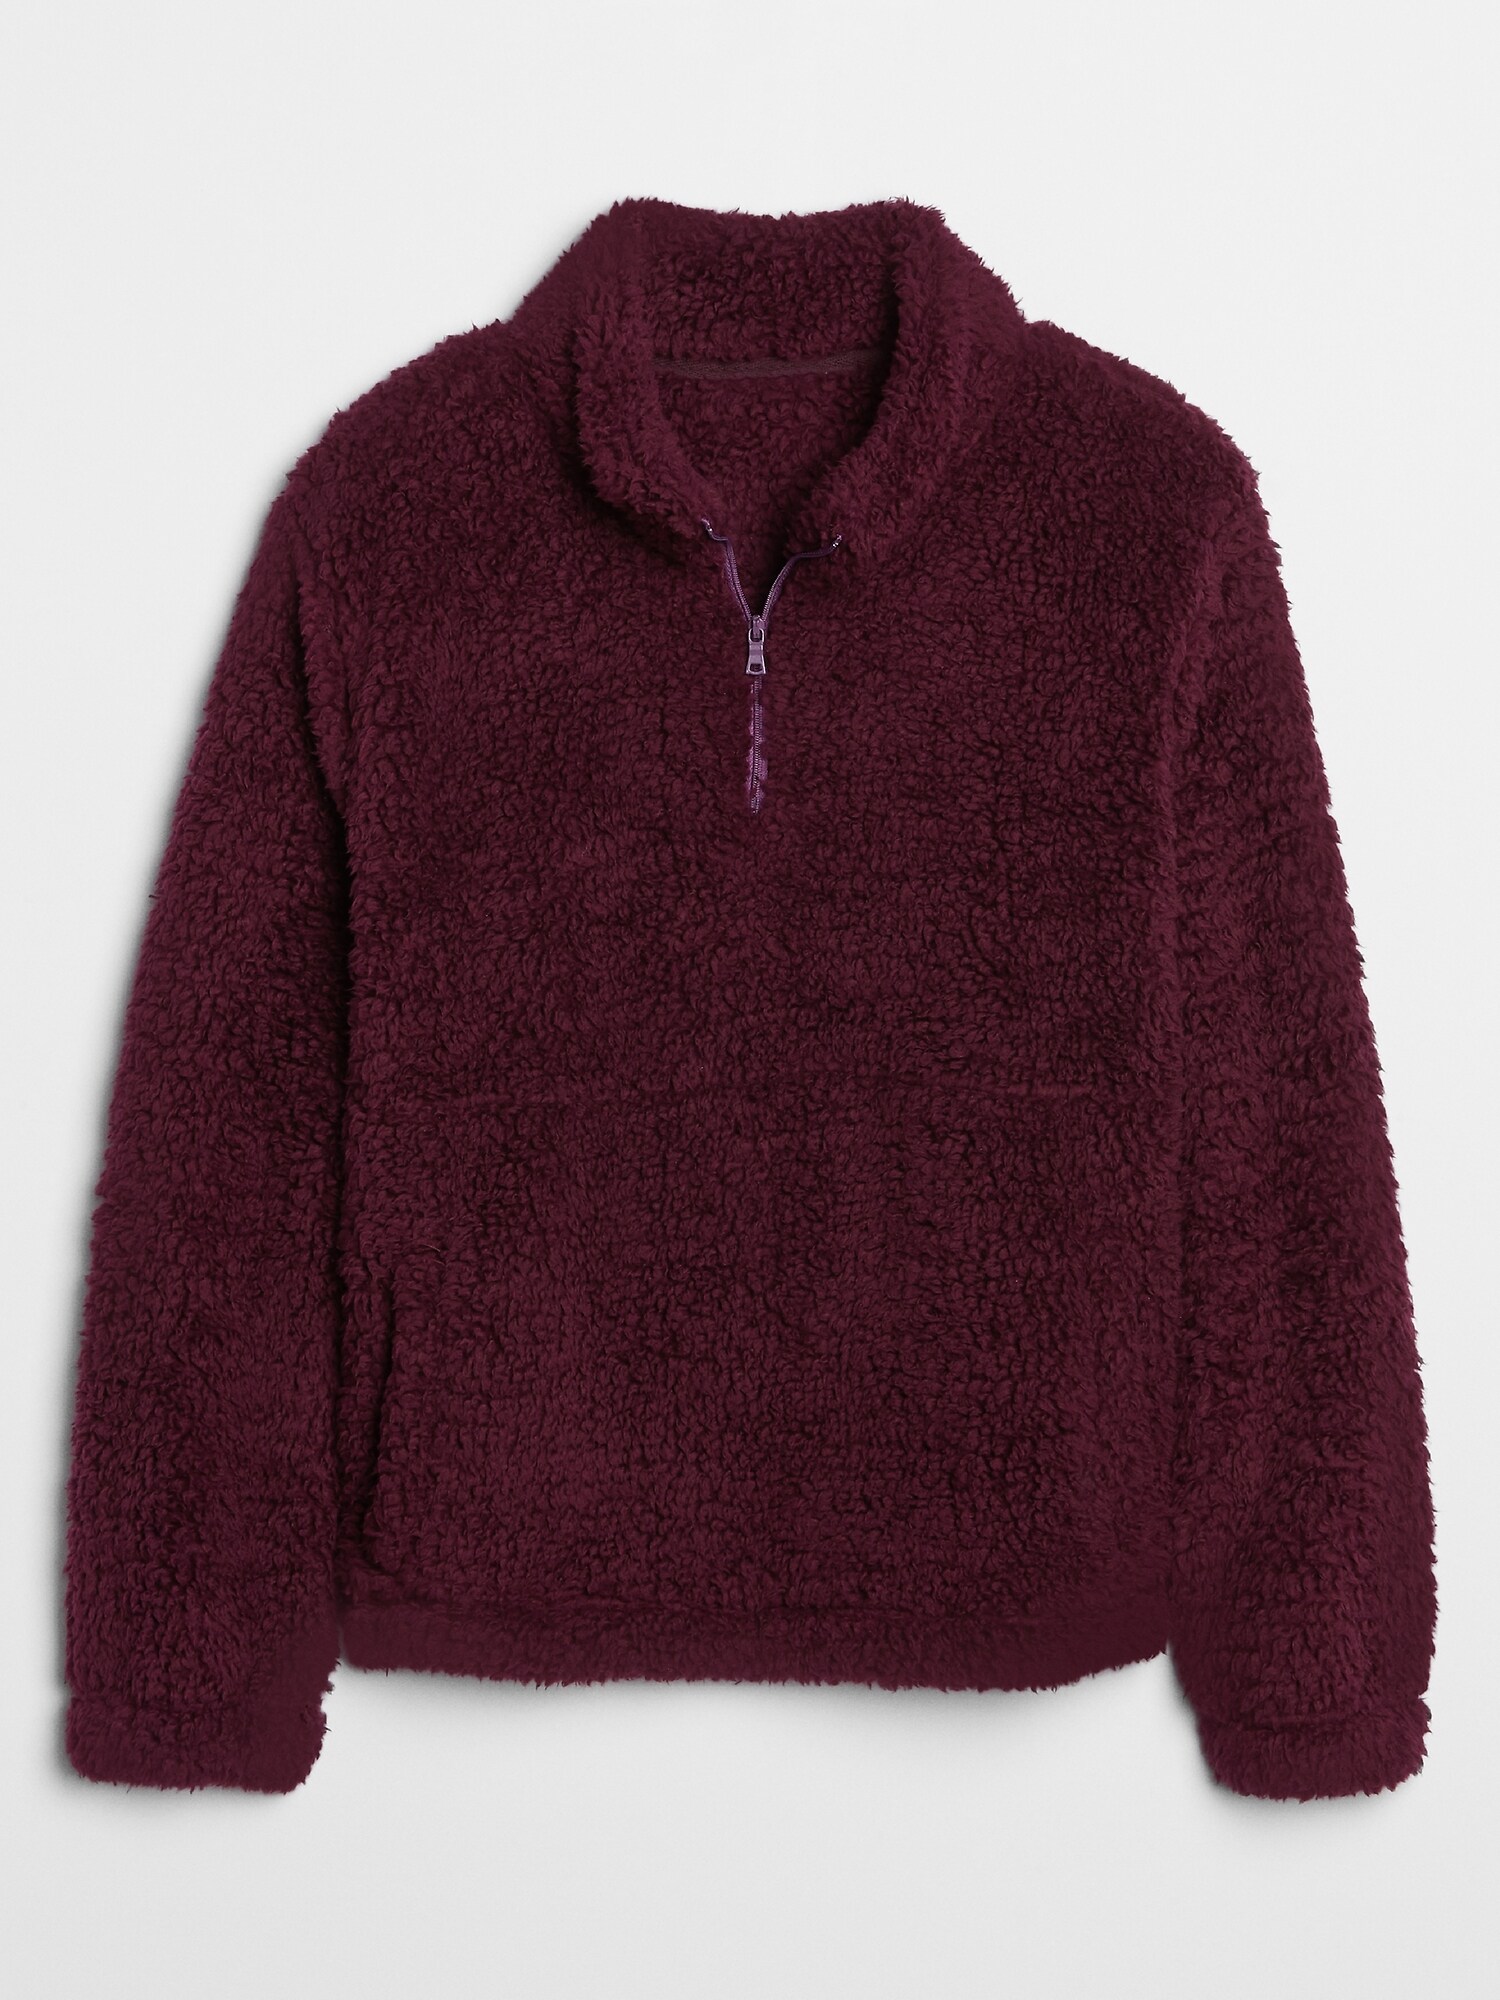 plum sherpa pullover